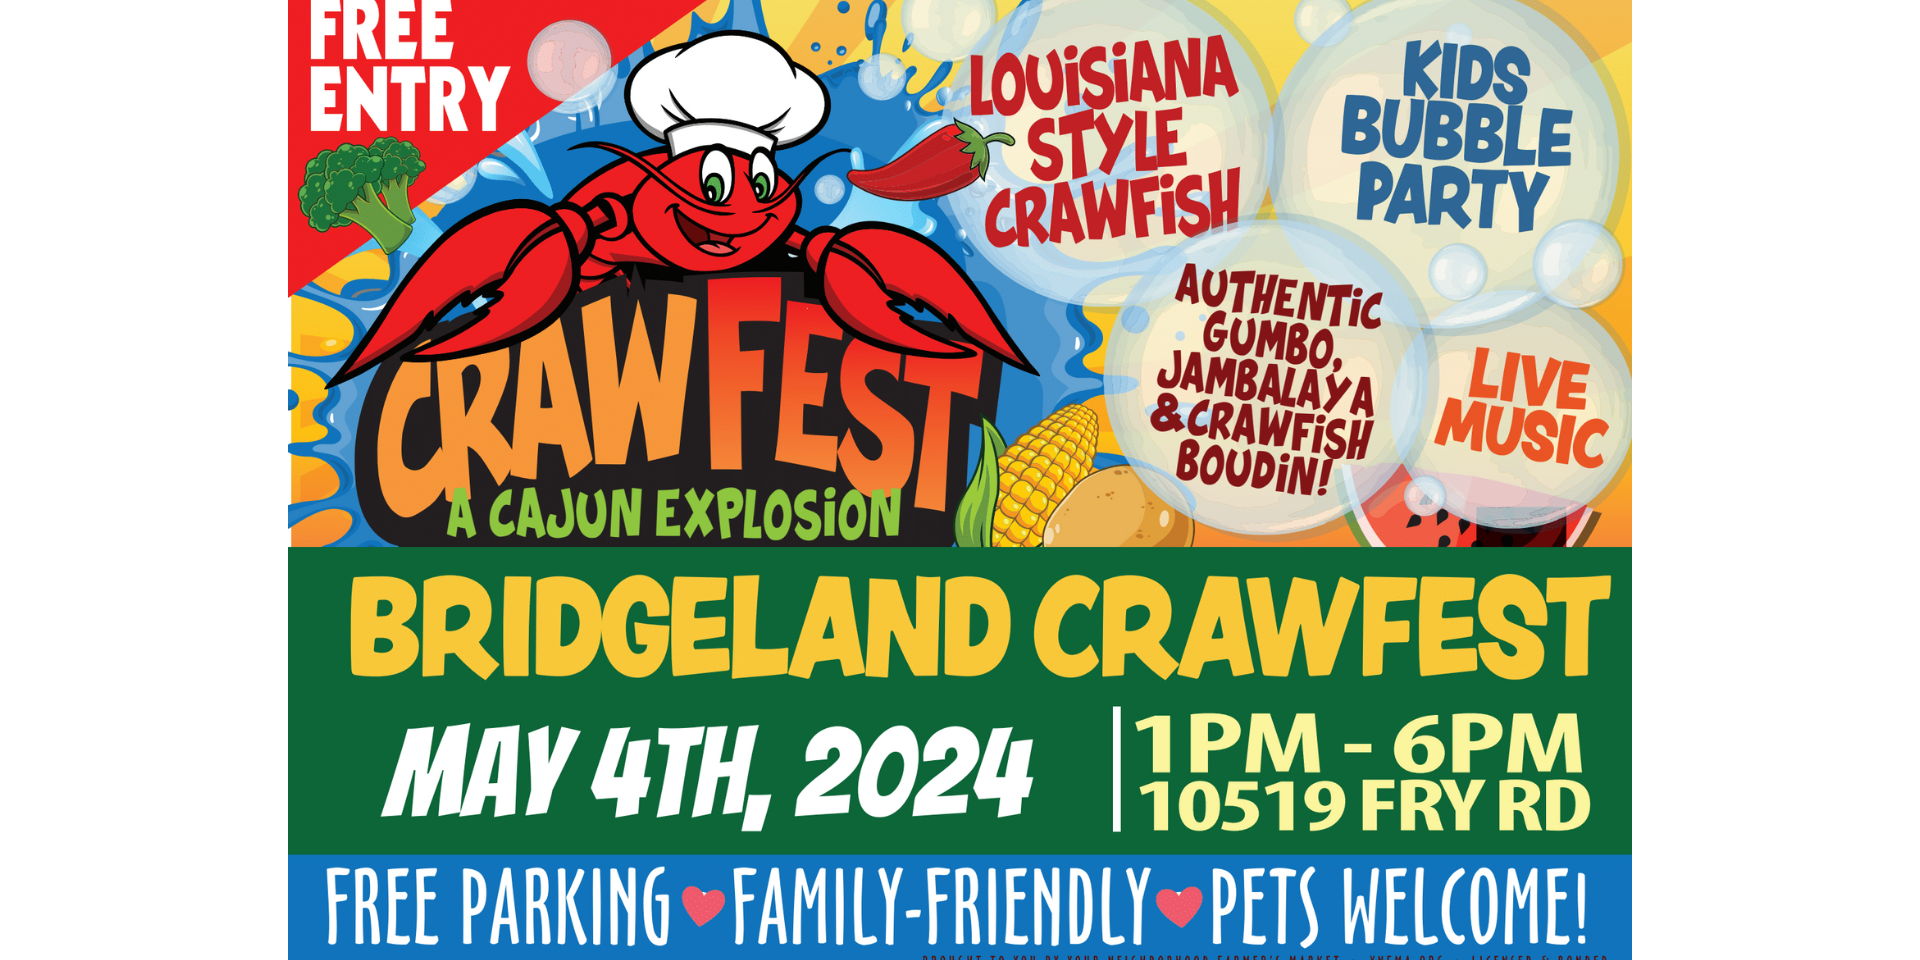 Bridgeland Crawfest 2024 promotional image